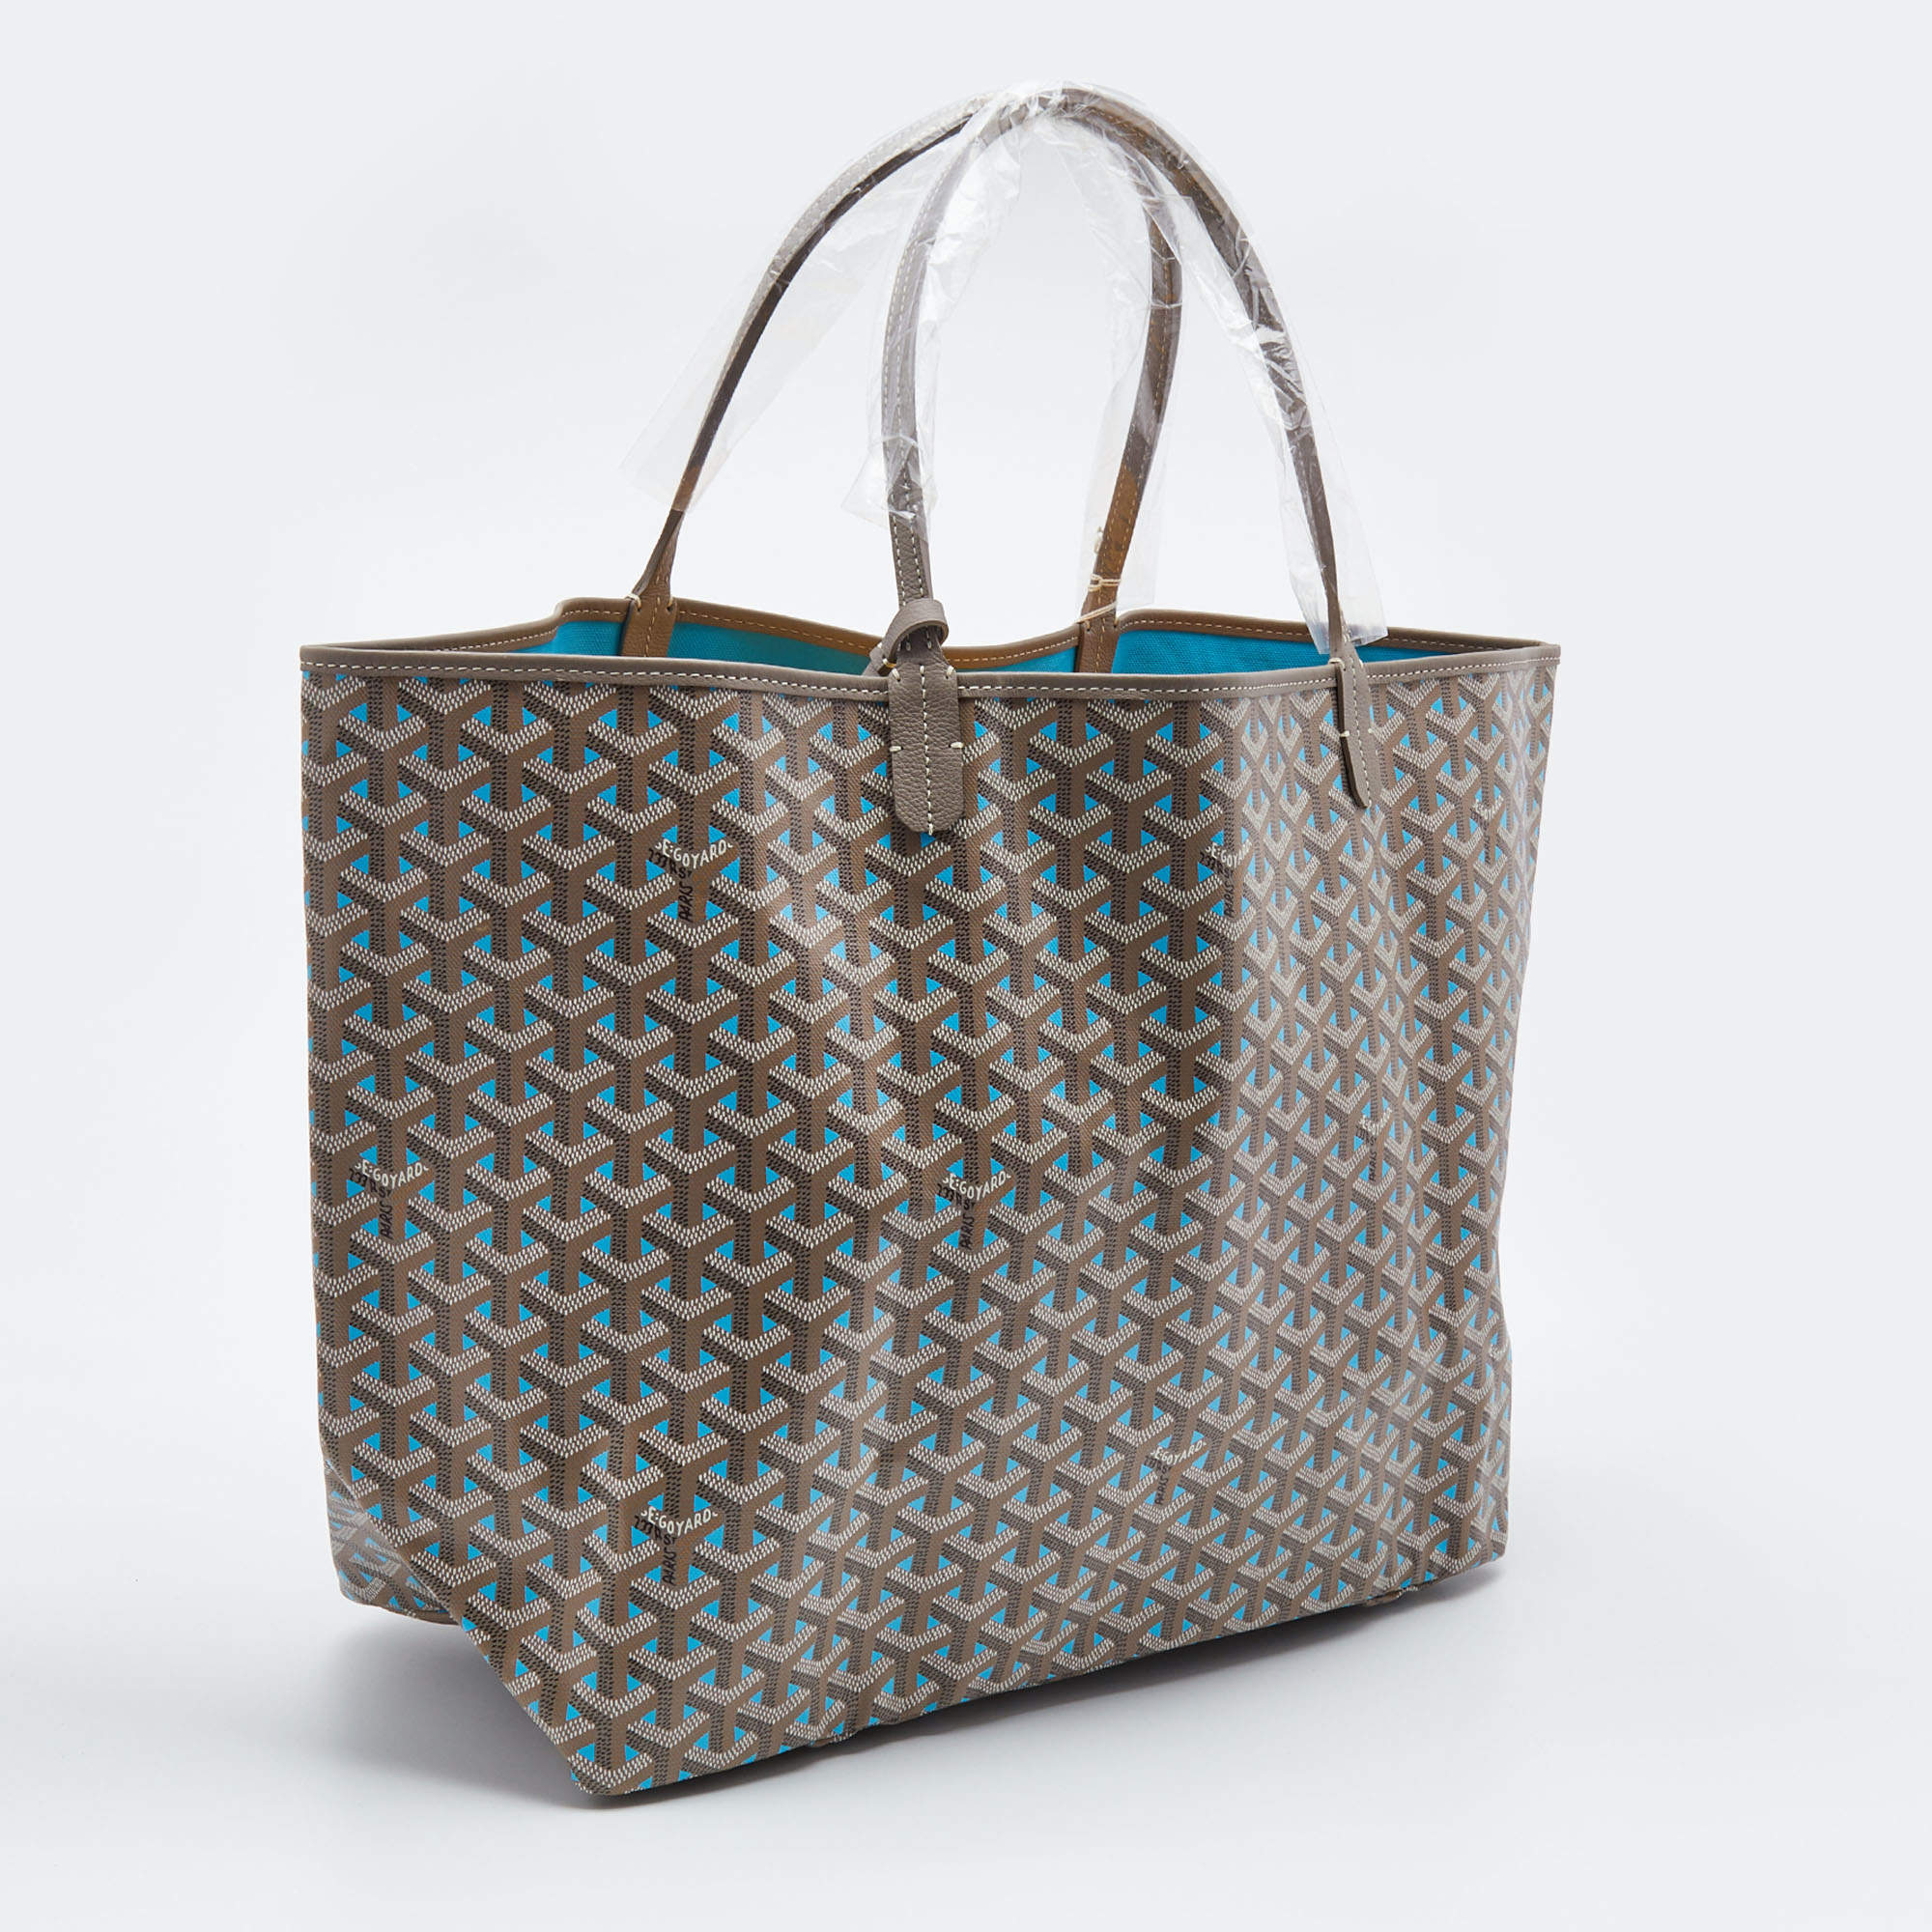 Goyard messenger : r/handbags